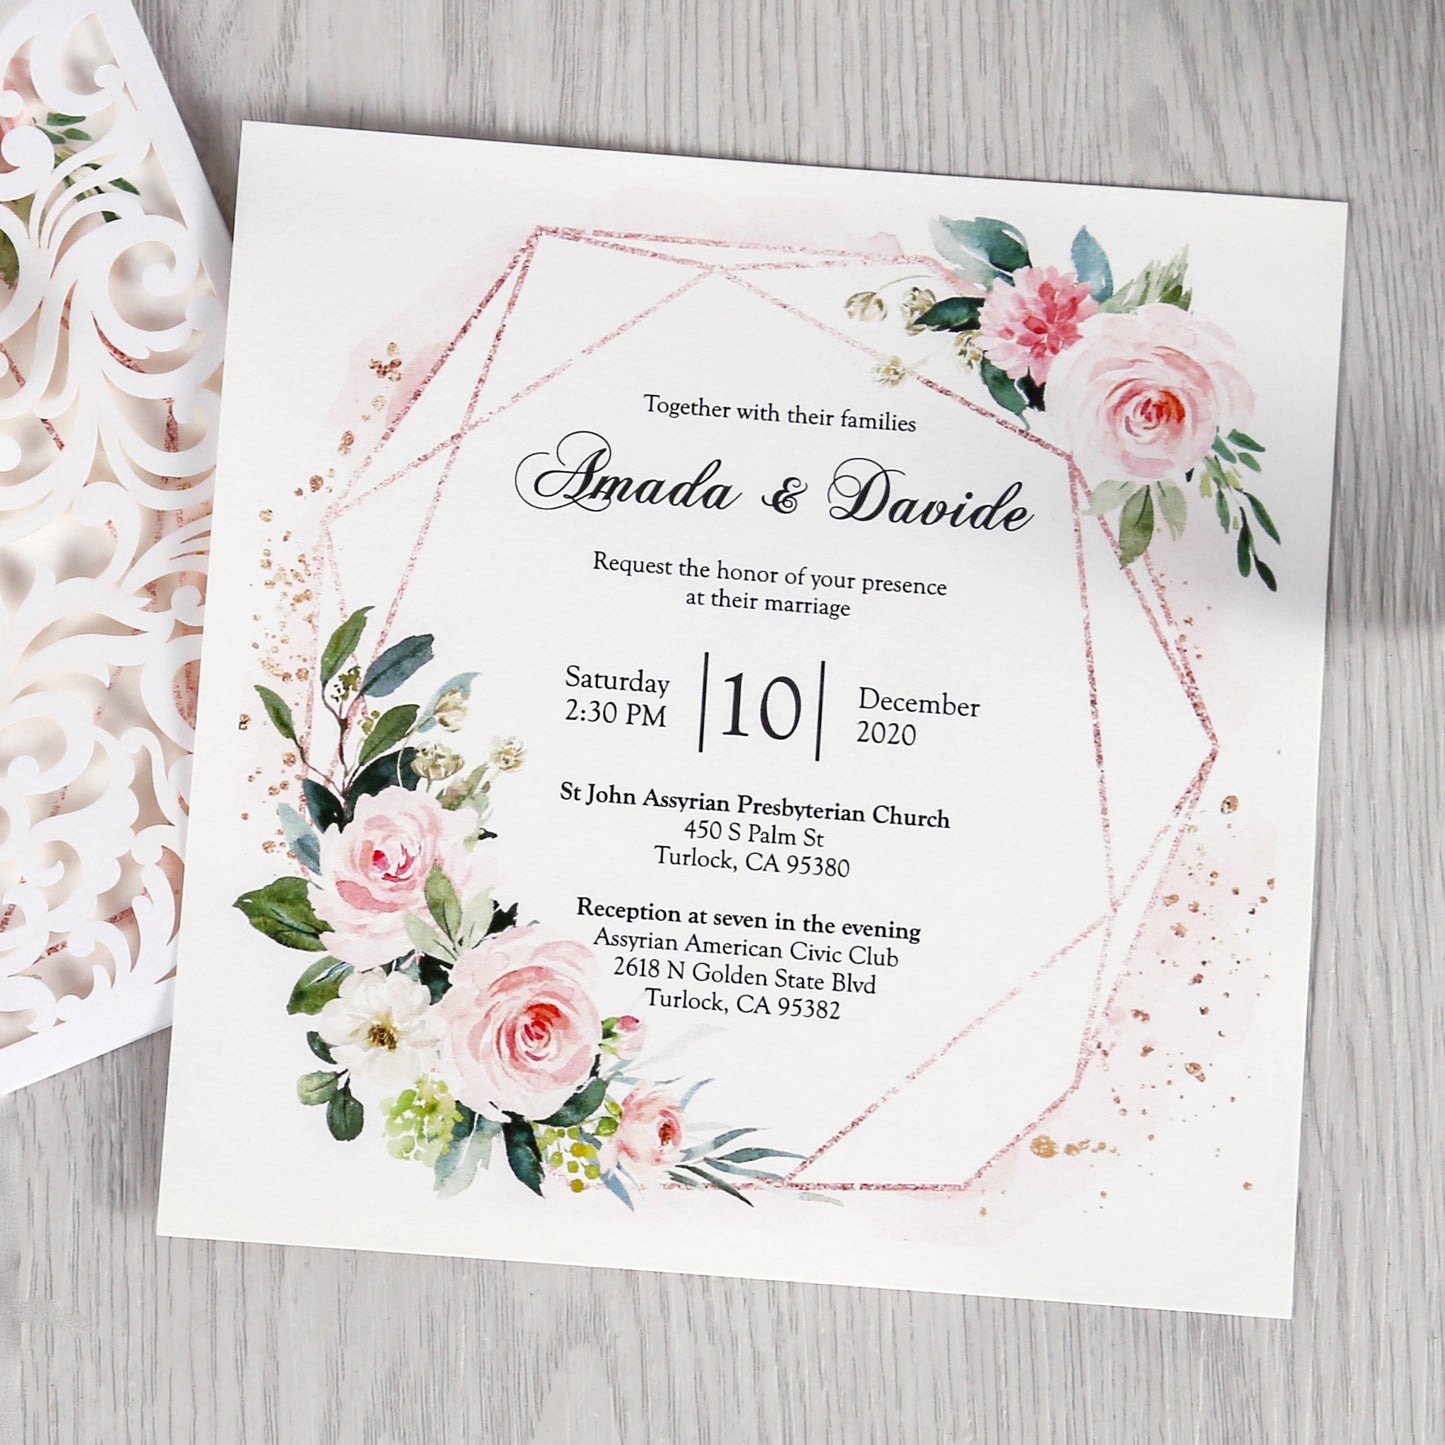 Ivory White Bowknot Lace Wedding Invitations,Invitations